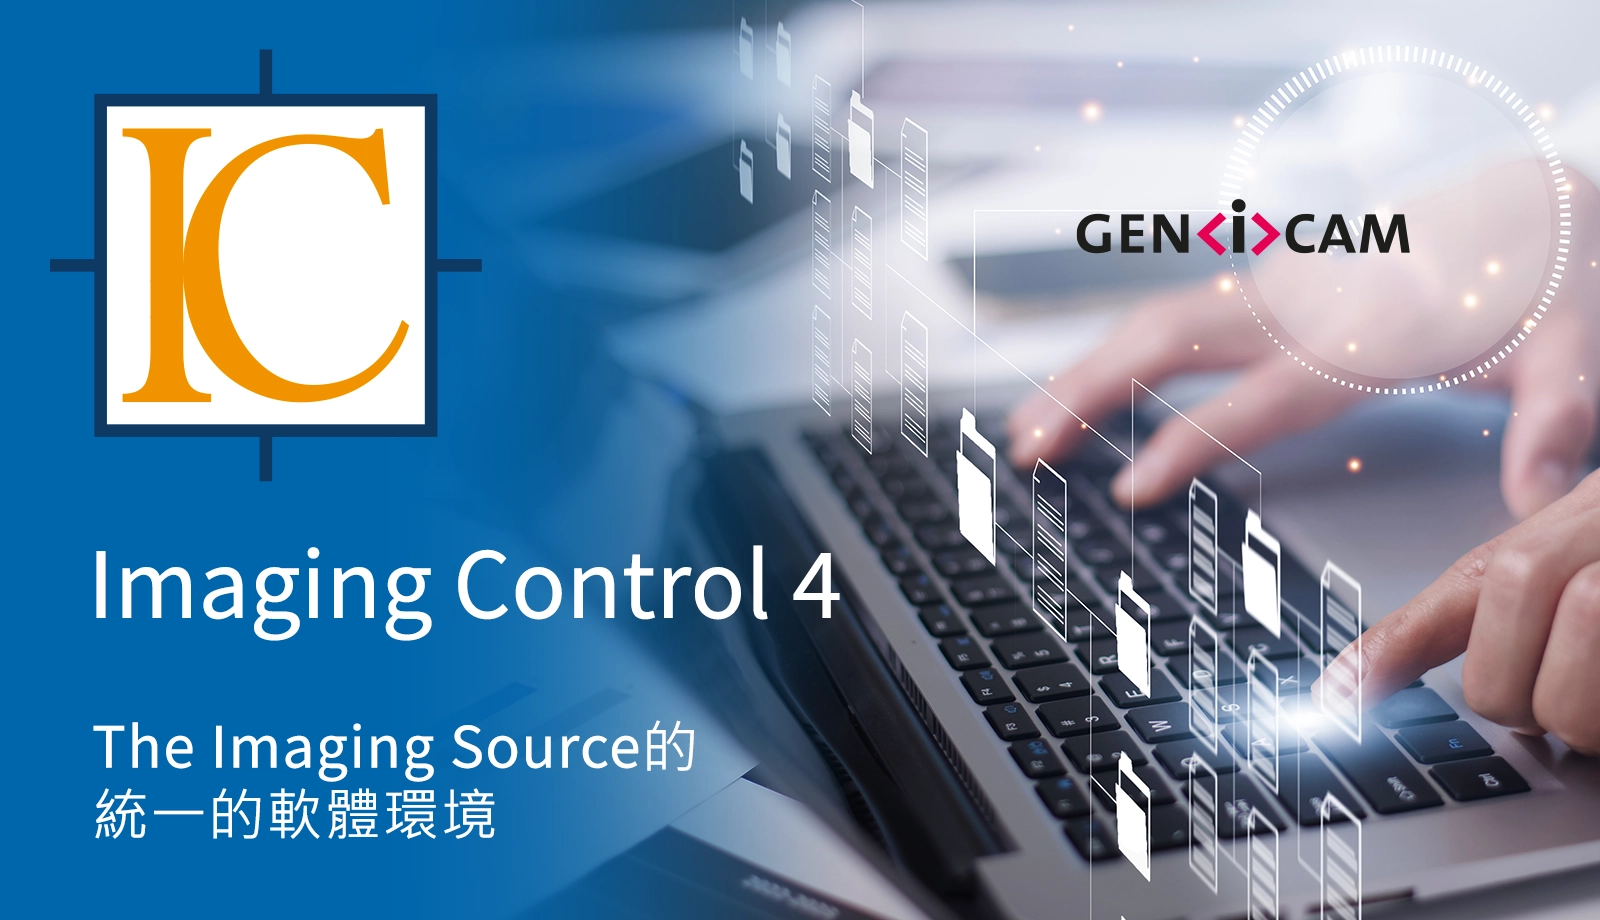 IC Imaging Control 4：The Imaging Source的統一軟體環境